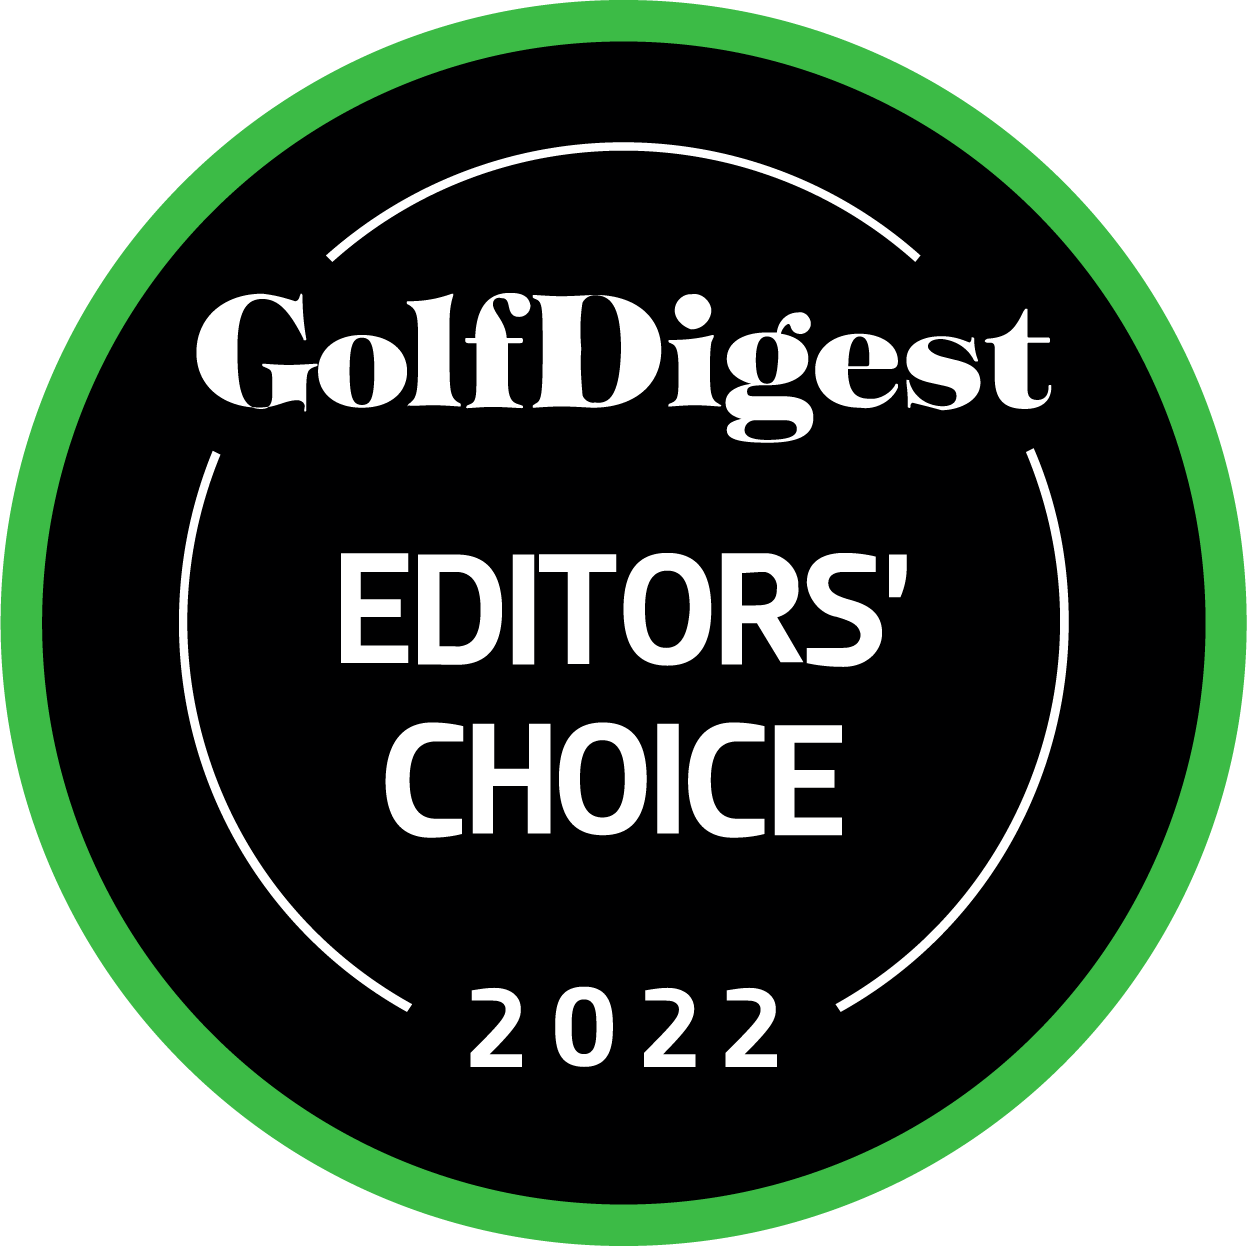 Golf digest editors choice award 2022